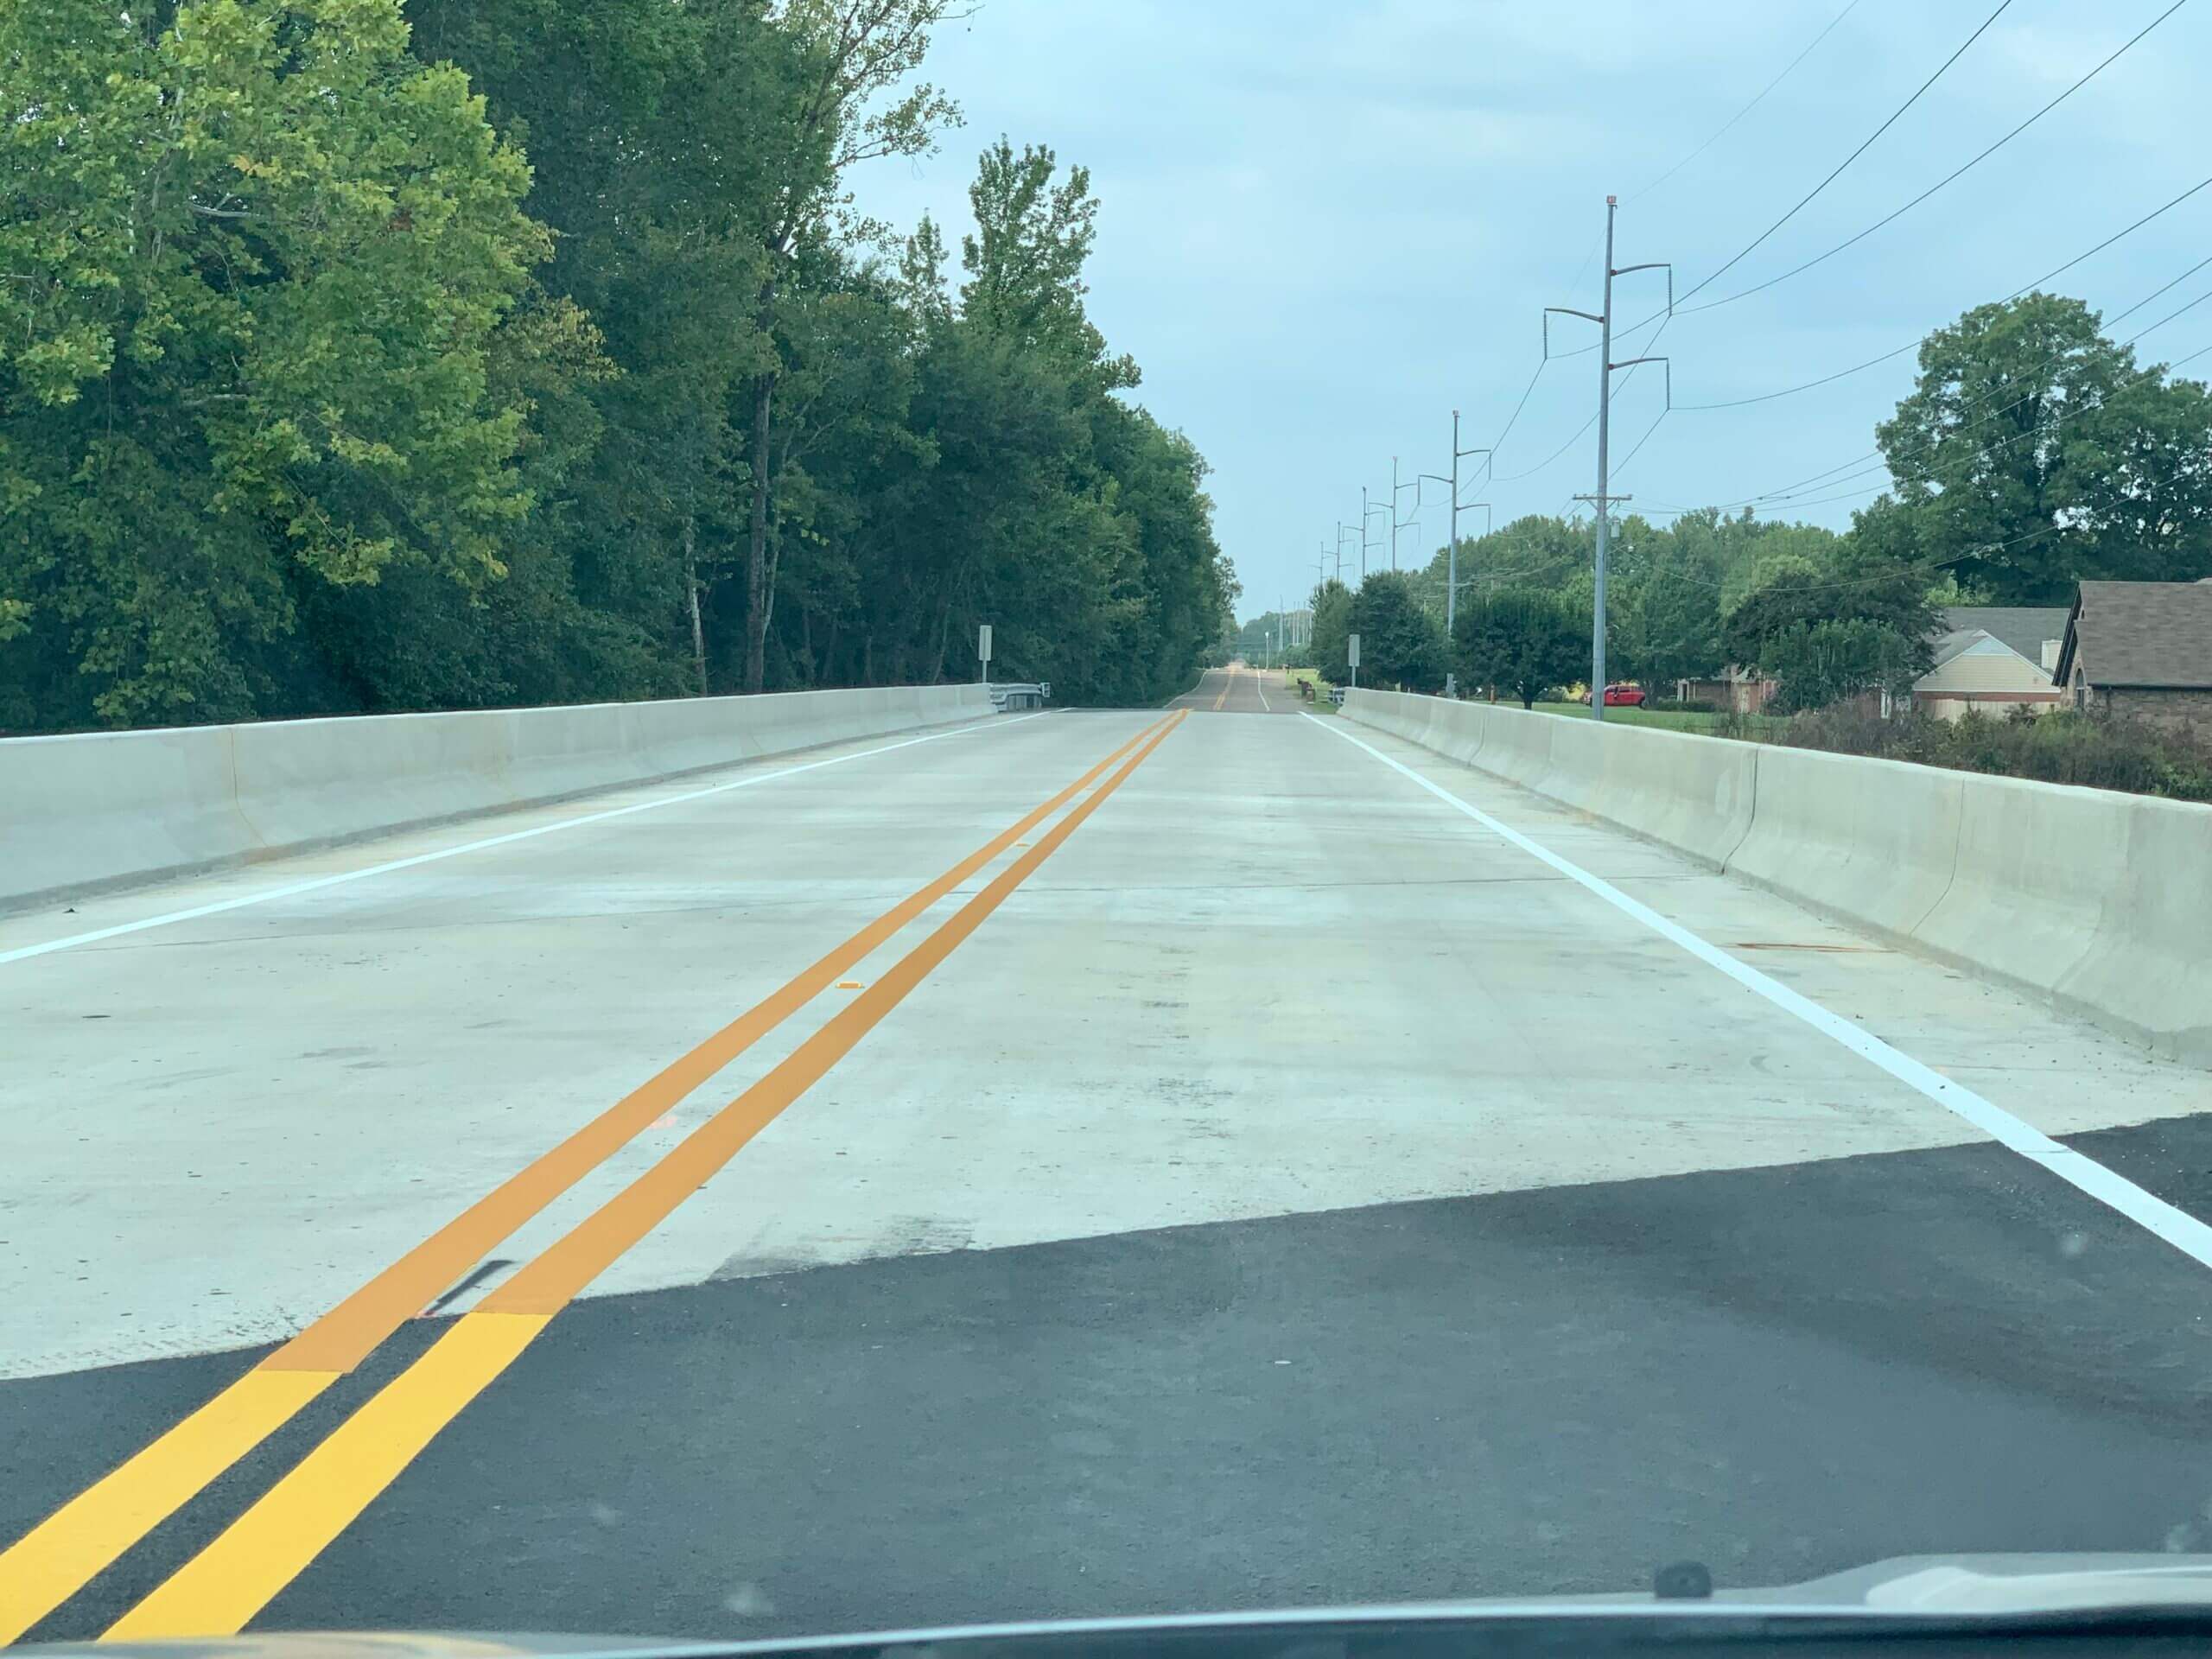 Bridge repaired, Stateline Road West reopened